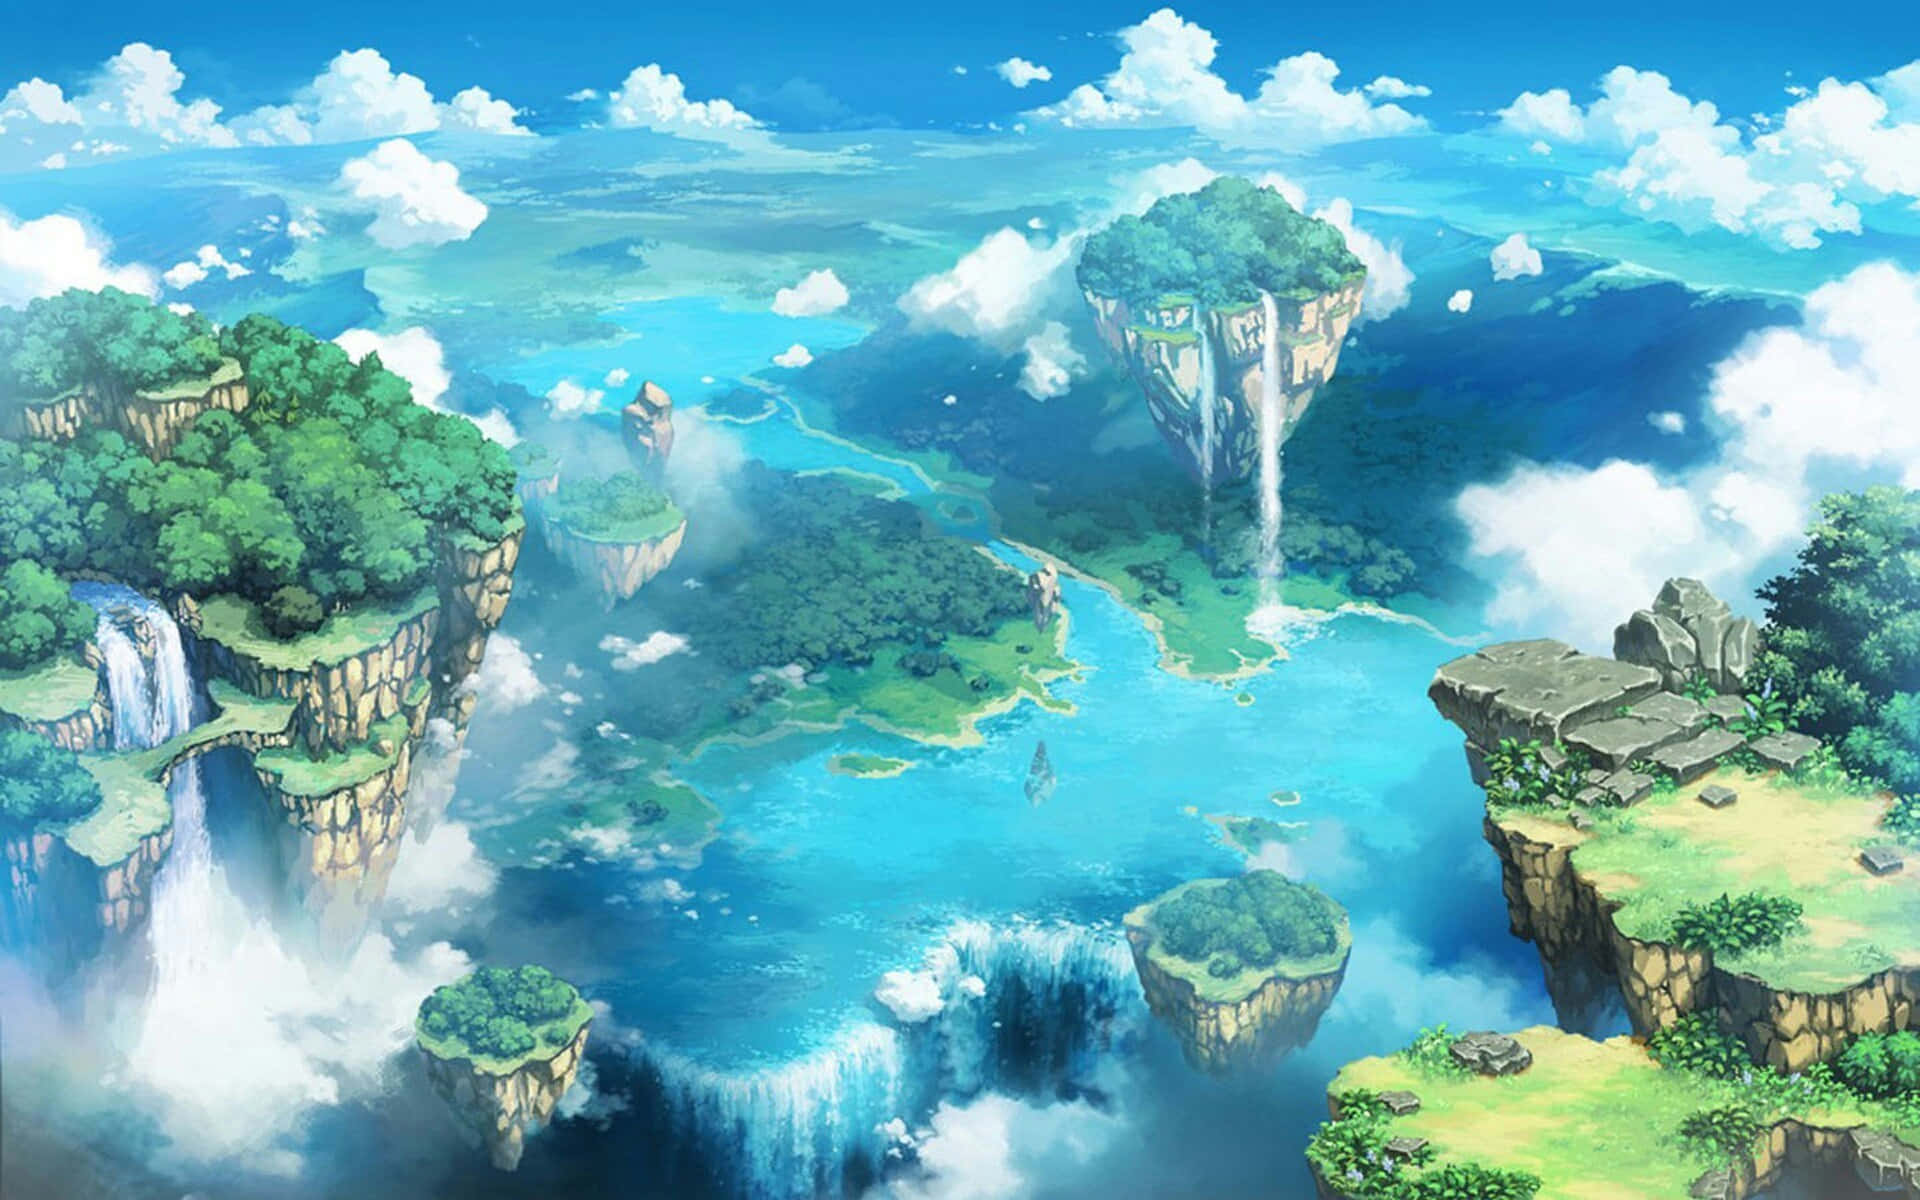 Anime Landscapes Theme for Windows 10 | 8 | 7 | Anime scenery, Landscape  wallpaper, Anime background